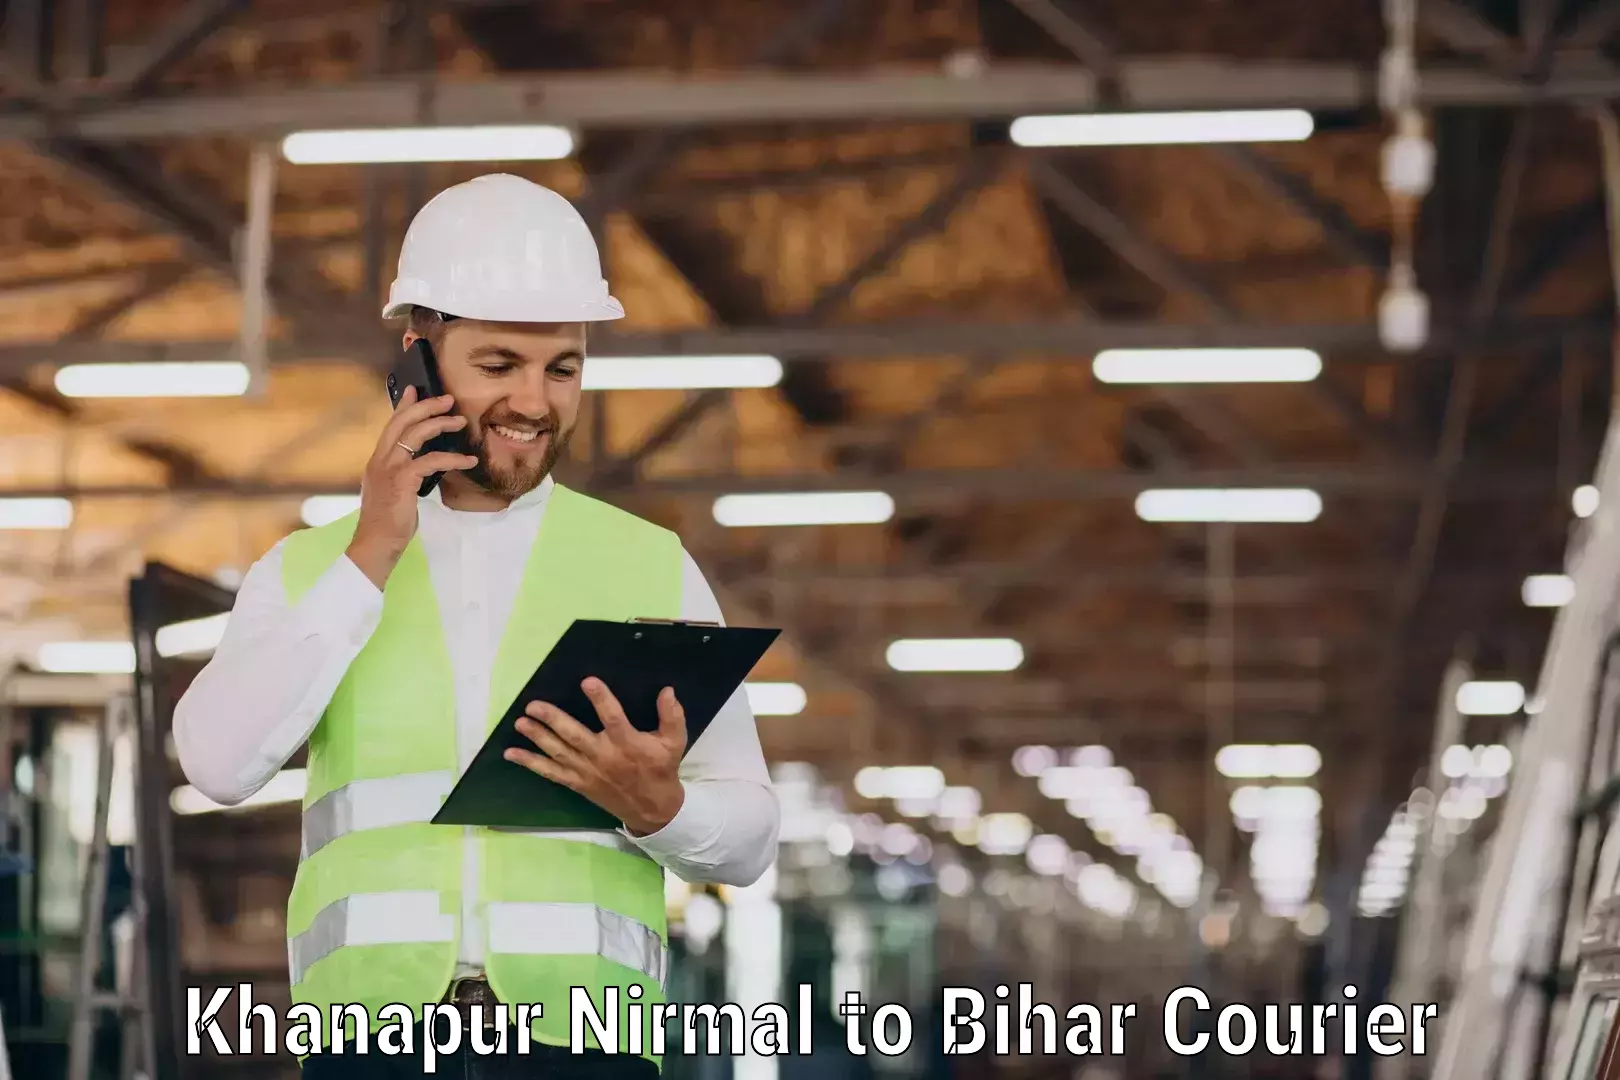 Parcel delivery automation Khanapur Nirmal to Piro